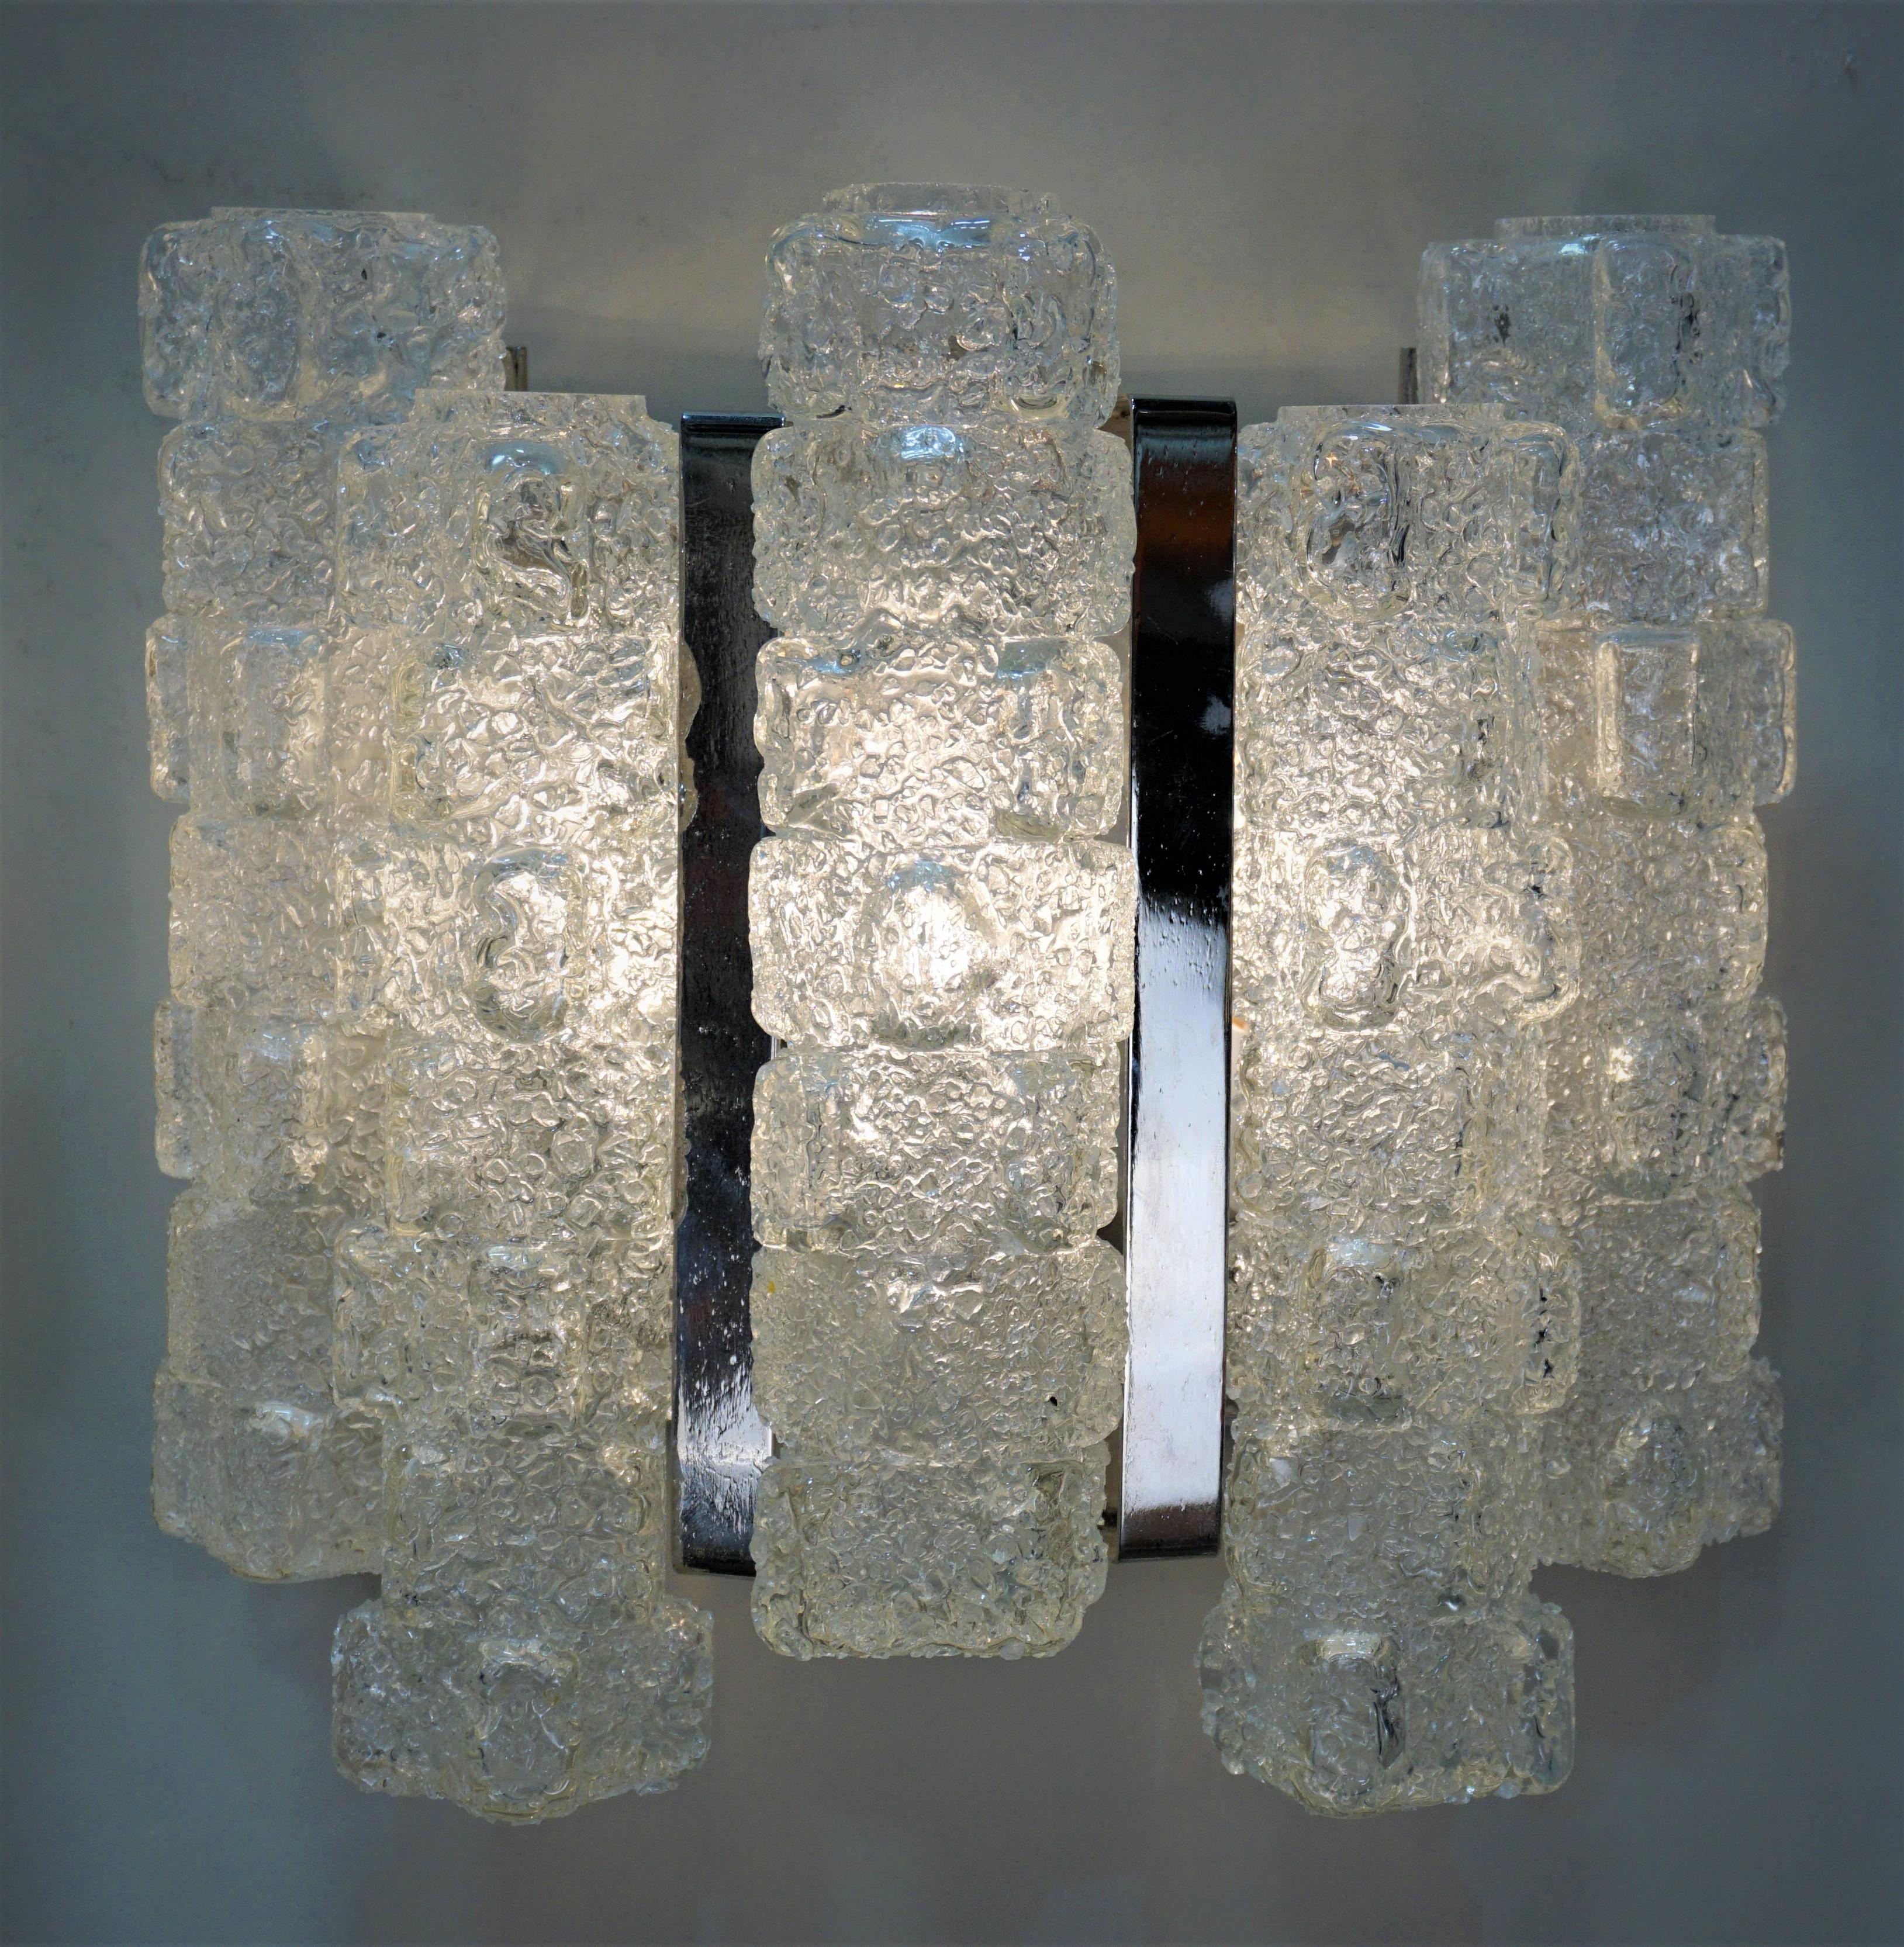 Pair of Italian 1970s ice cube glass and nickel wall sconces
4 lights 60 watt each.